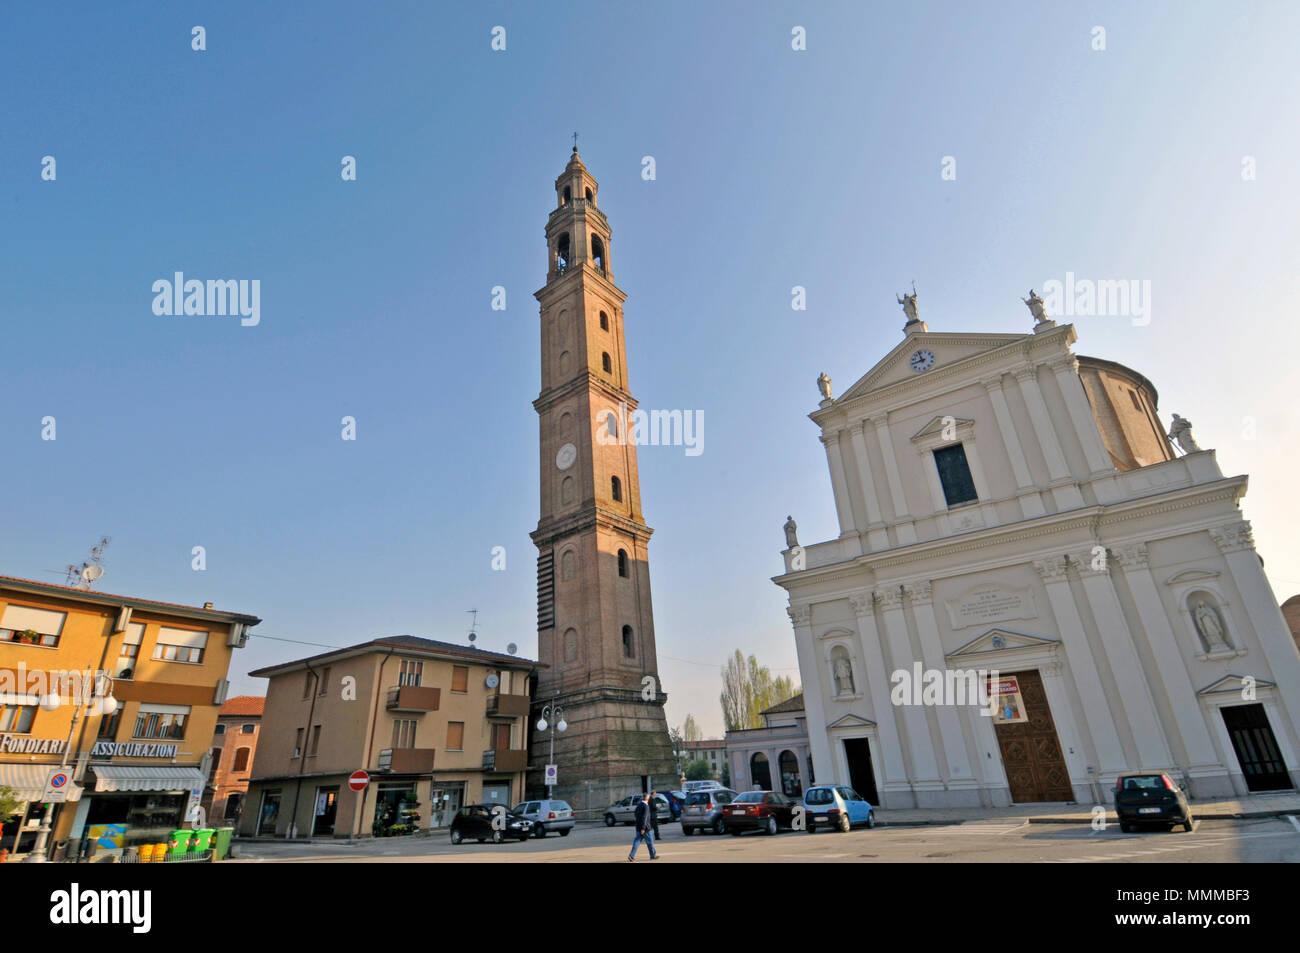 Turm und die Kirche des Heiligen Antonius Märtyrer, Piazza Guglielmo Marconi, Ficarolo, Rovigo, Italien Stockfoto